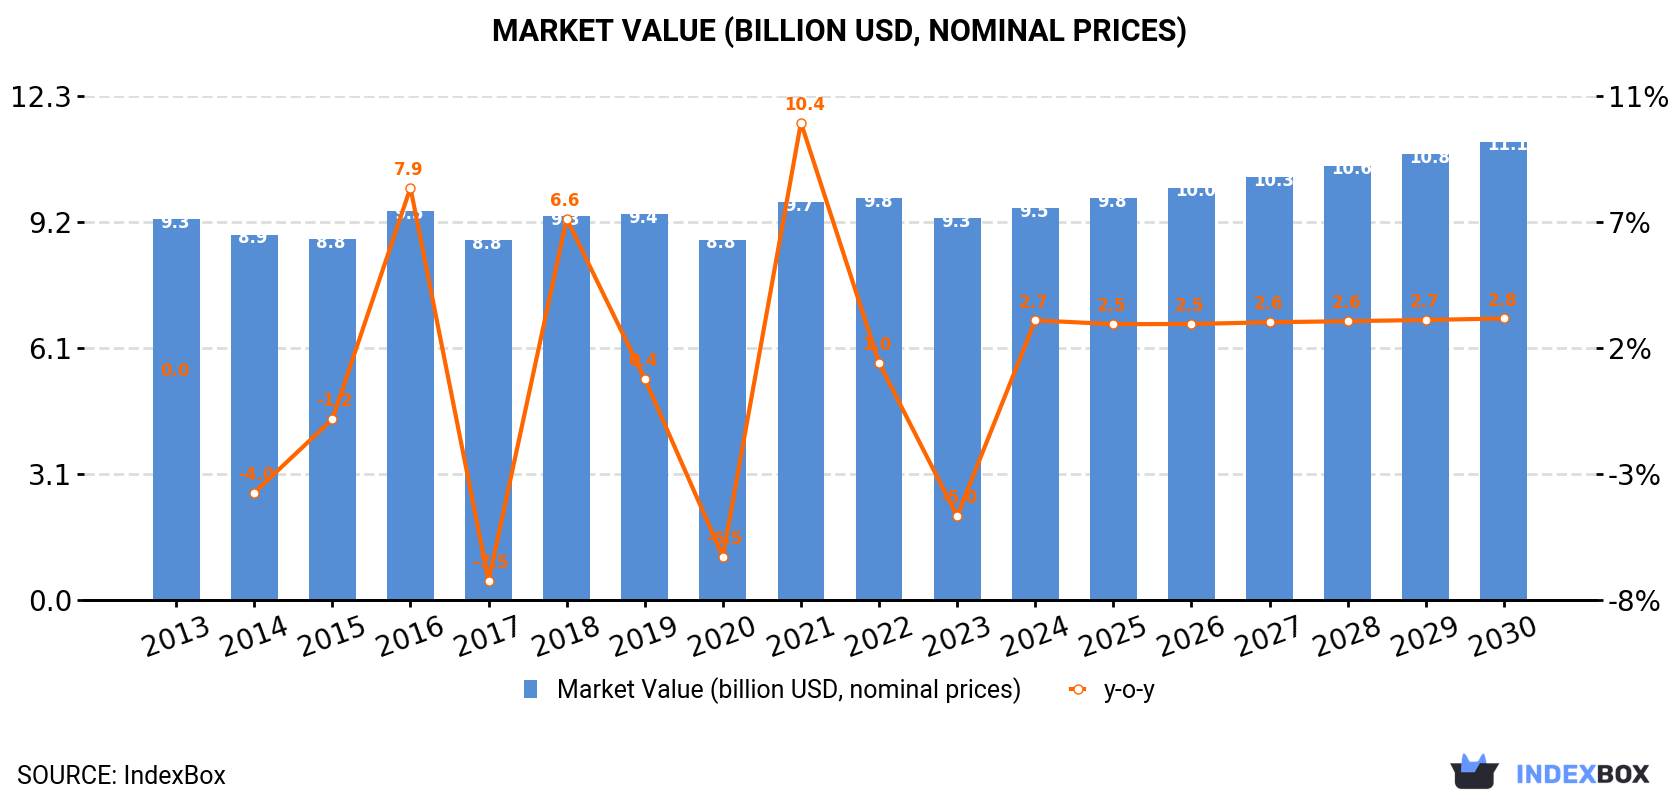 Market Value (billion USD, nominal prices)